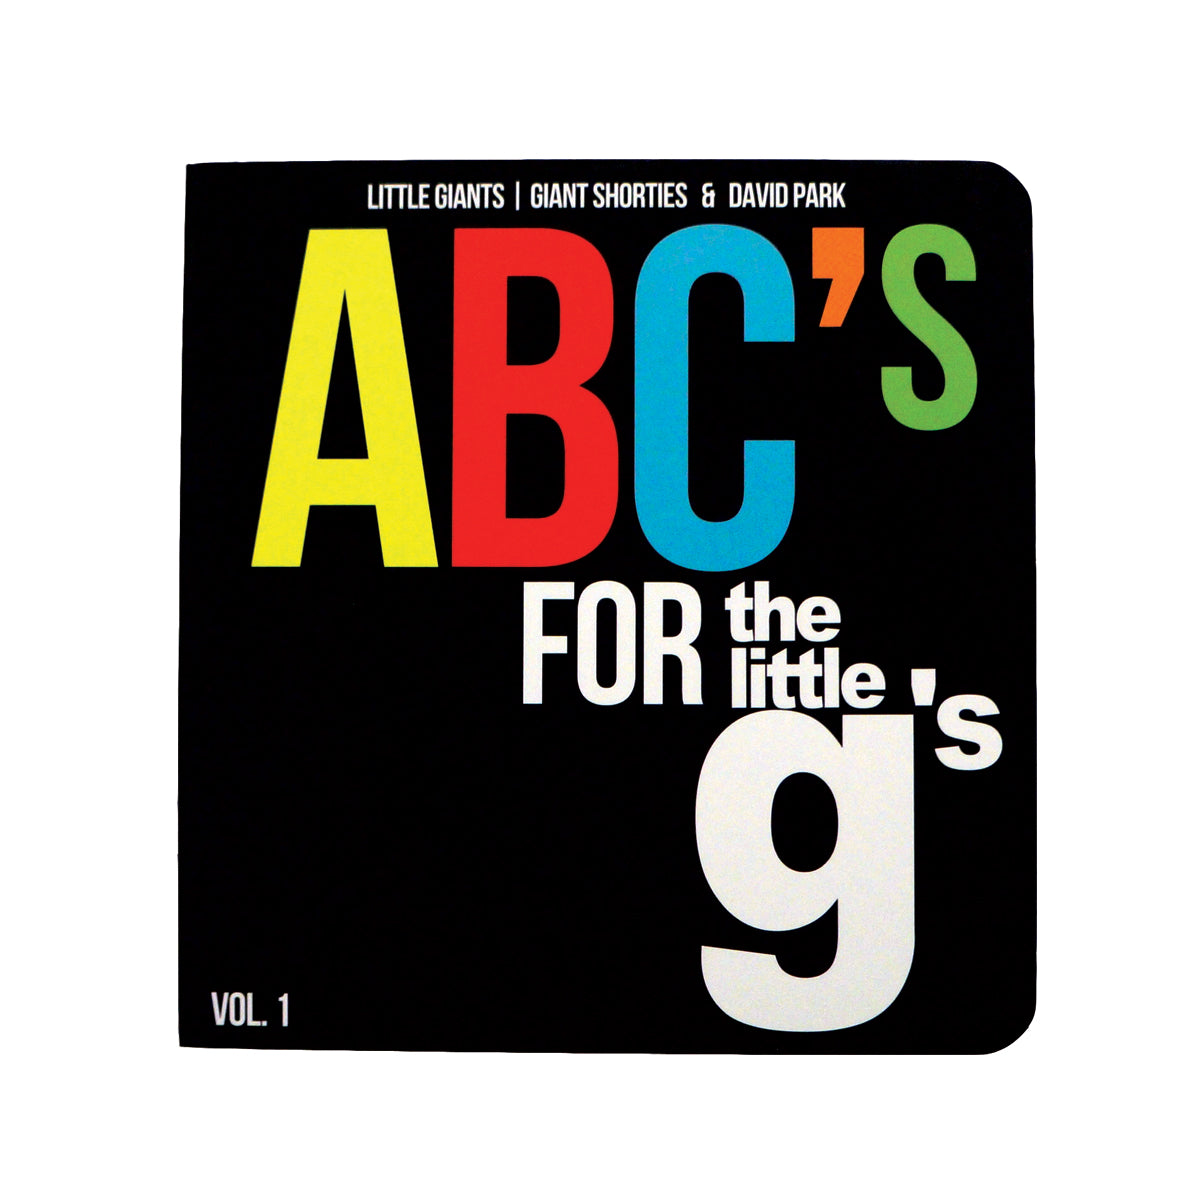 San Francisco Giants ABC (Board Books)